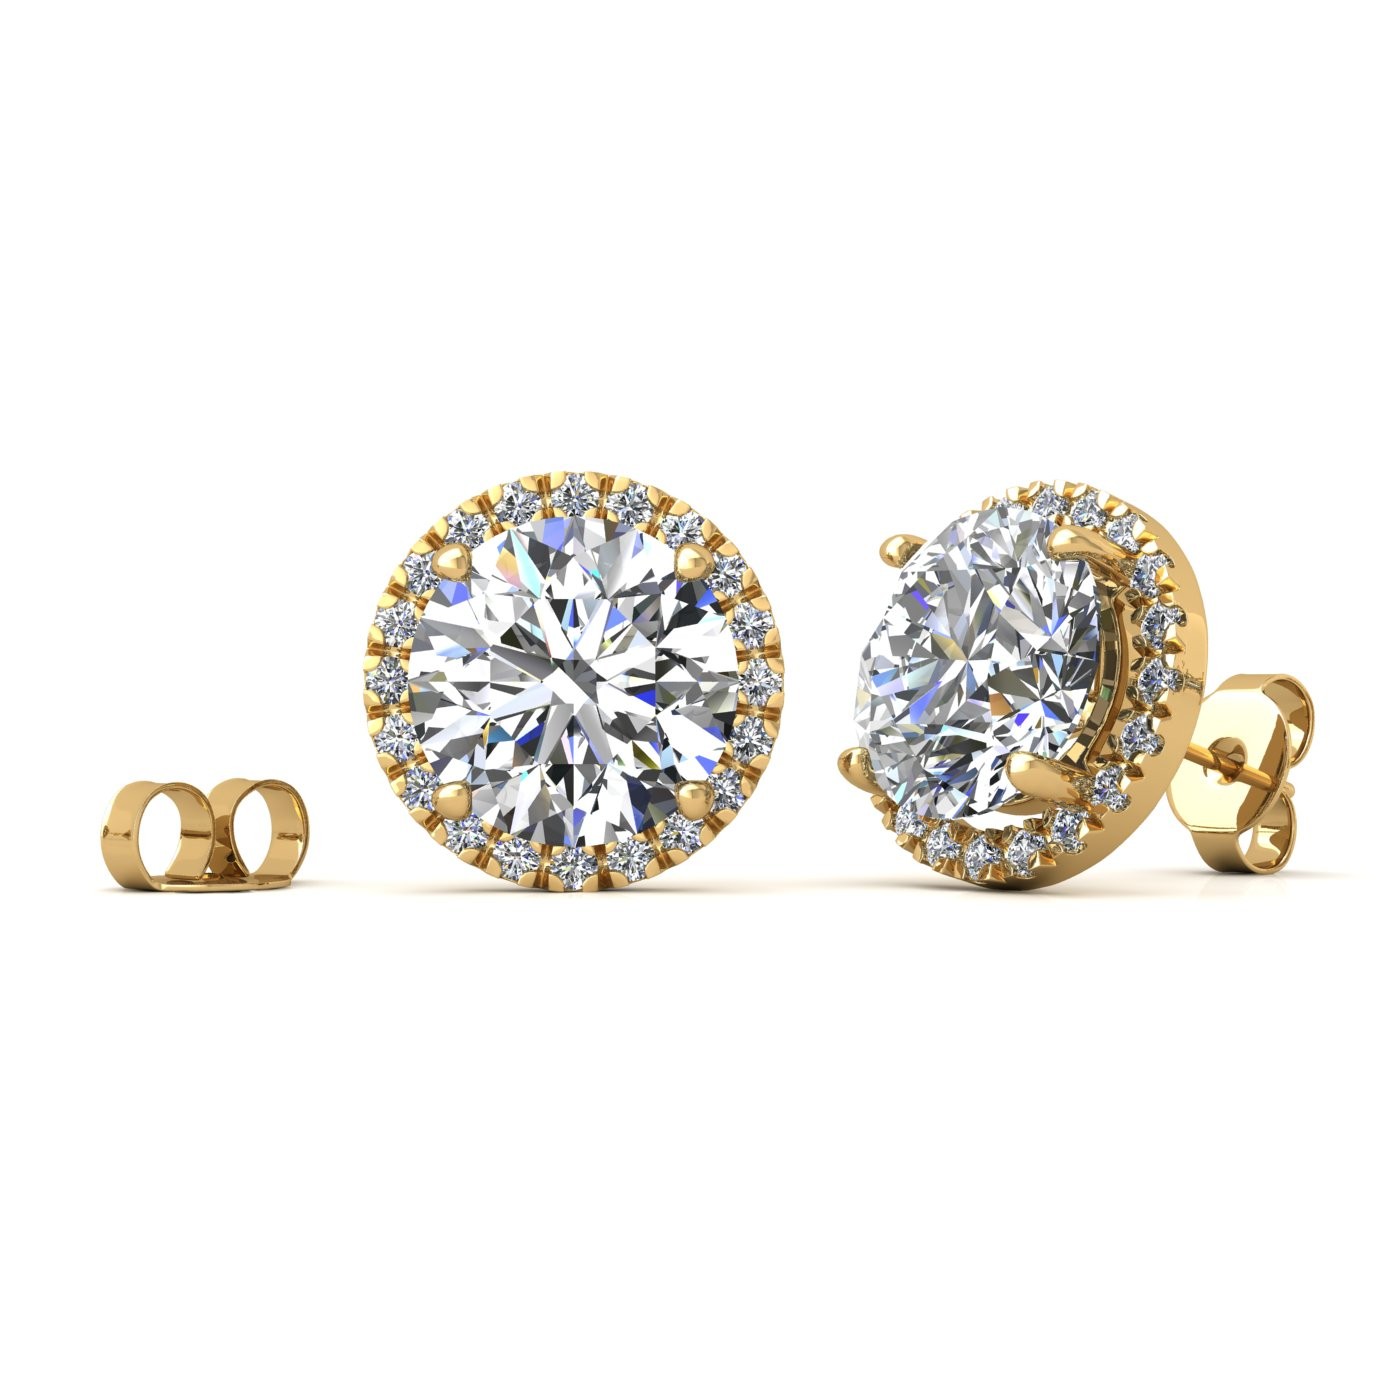 18k yellow gold 2 ct each (4,0 tcw) 4 prongs round shape diamond earrings with diamond pavÉ set halo